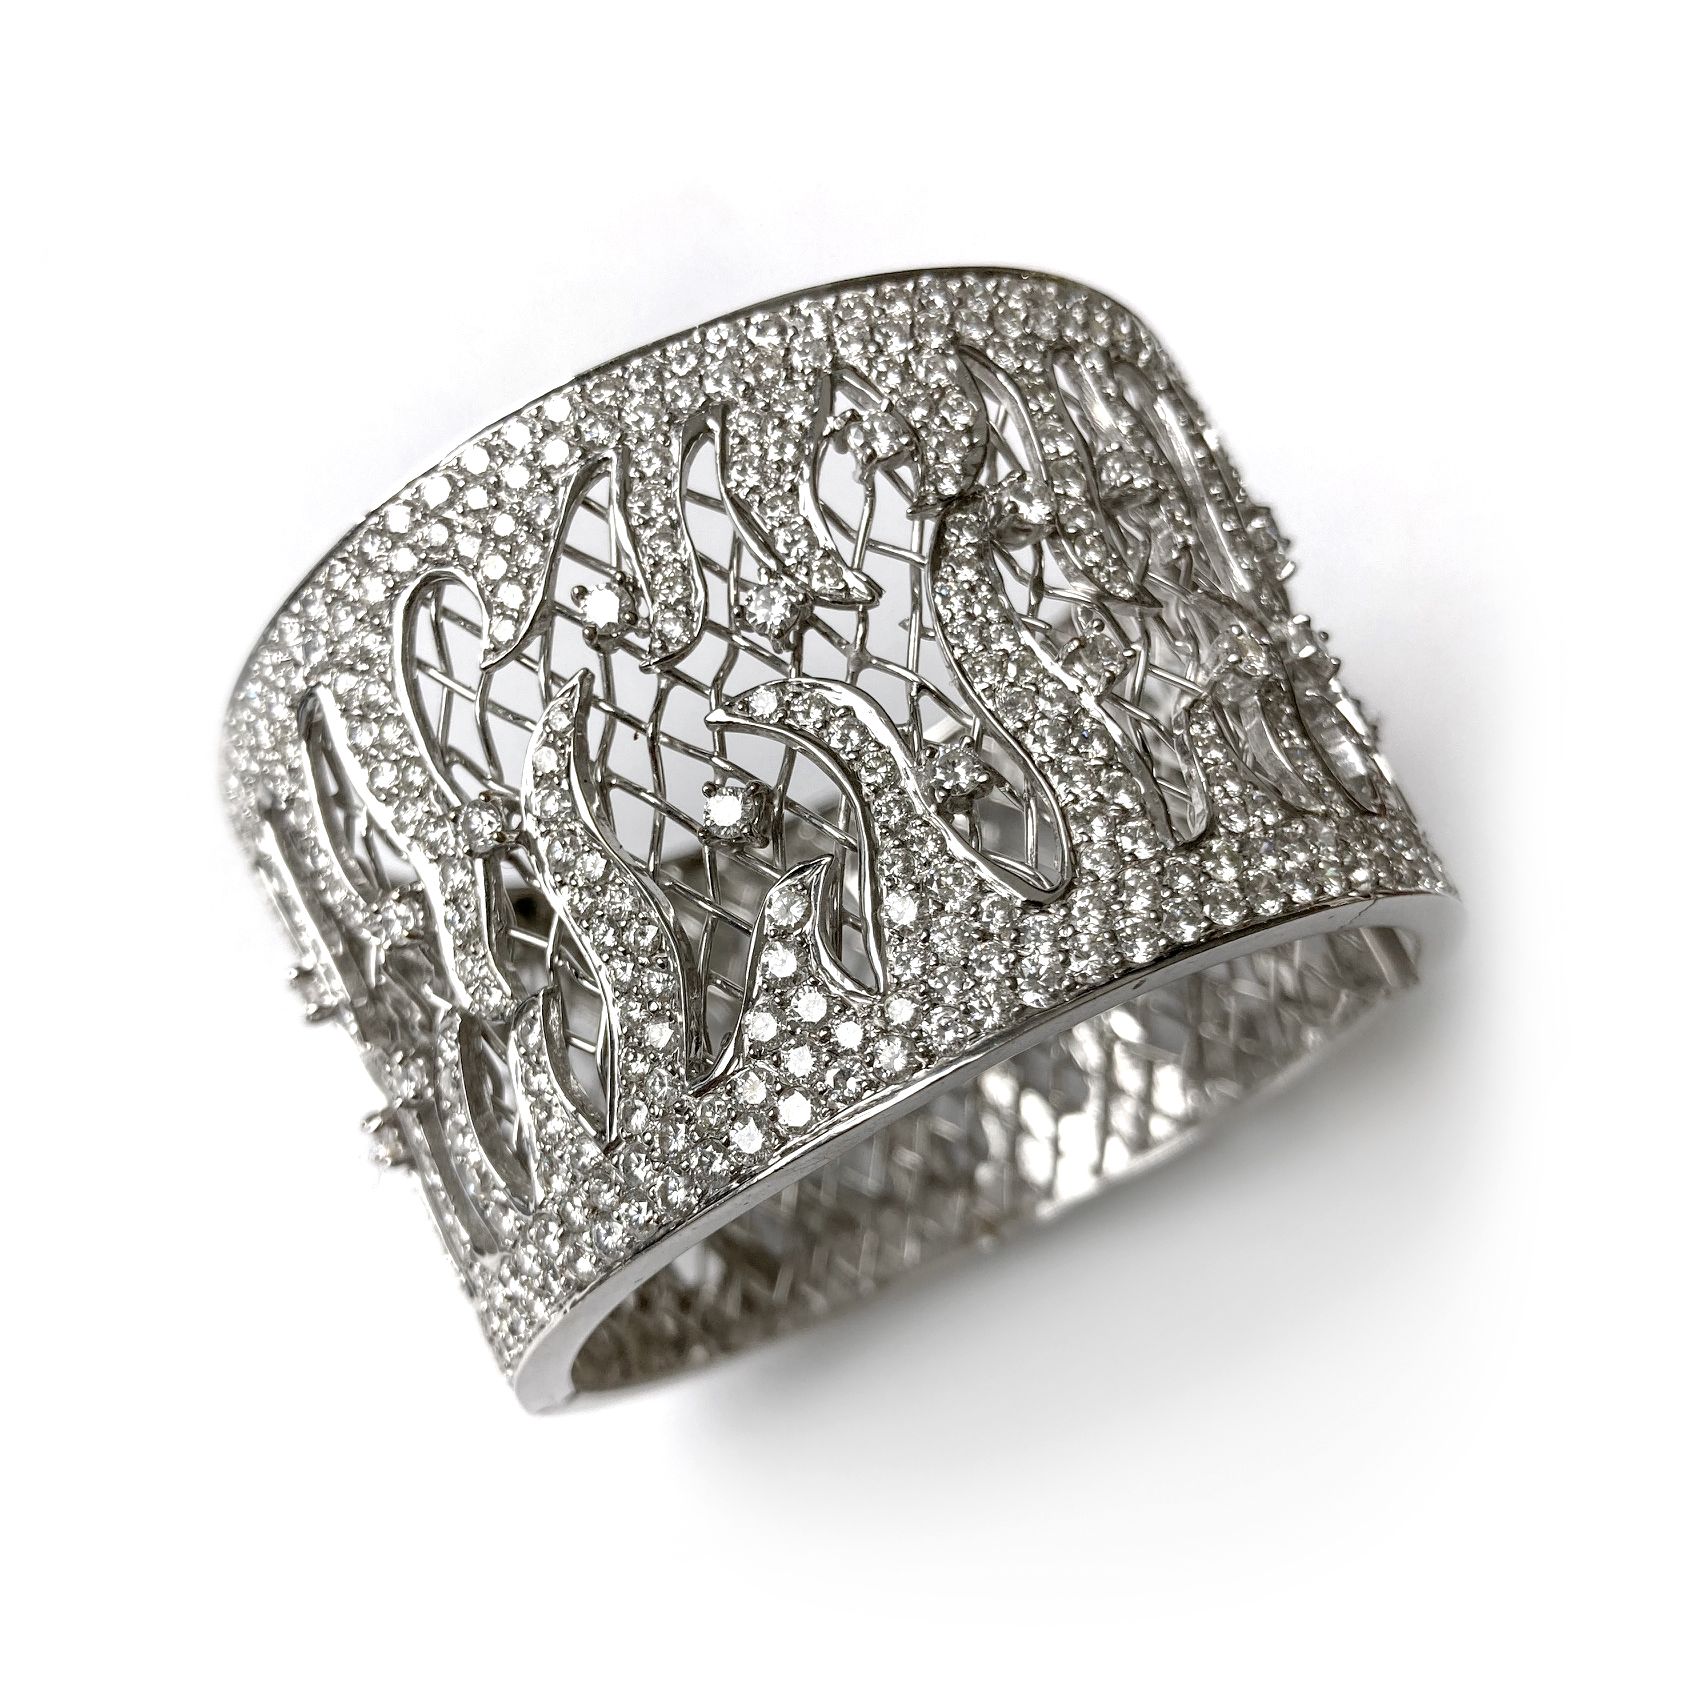 Null 18K白金刚性手镯，钻石以爪式和封闭式镶嵌，有网格和镂空波纹（共约15克拉）。

尺寸：68 x 60 mm

毛重 : 101,3 g